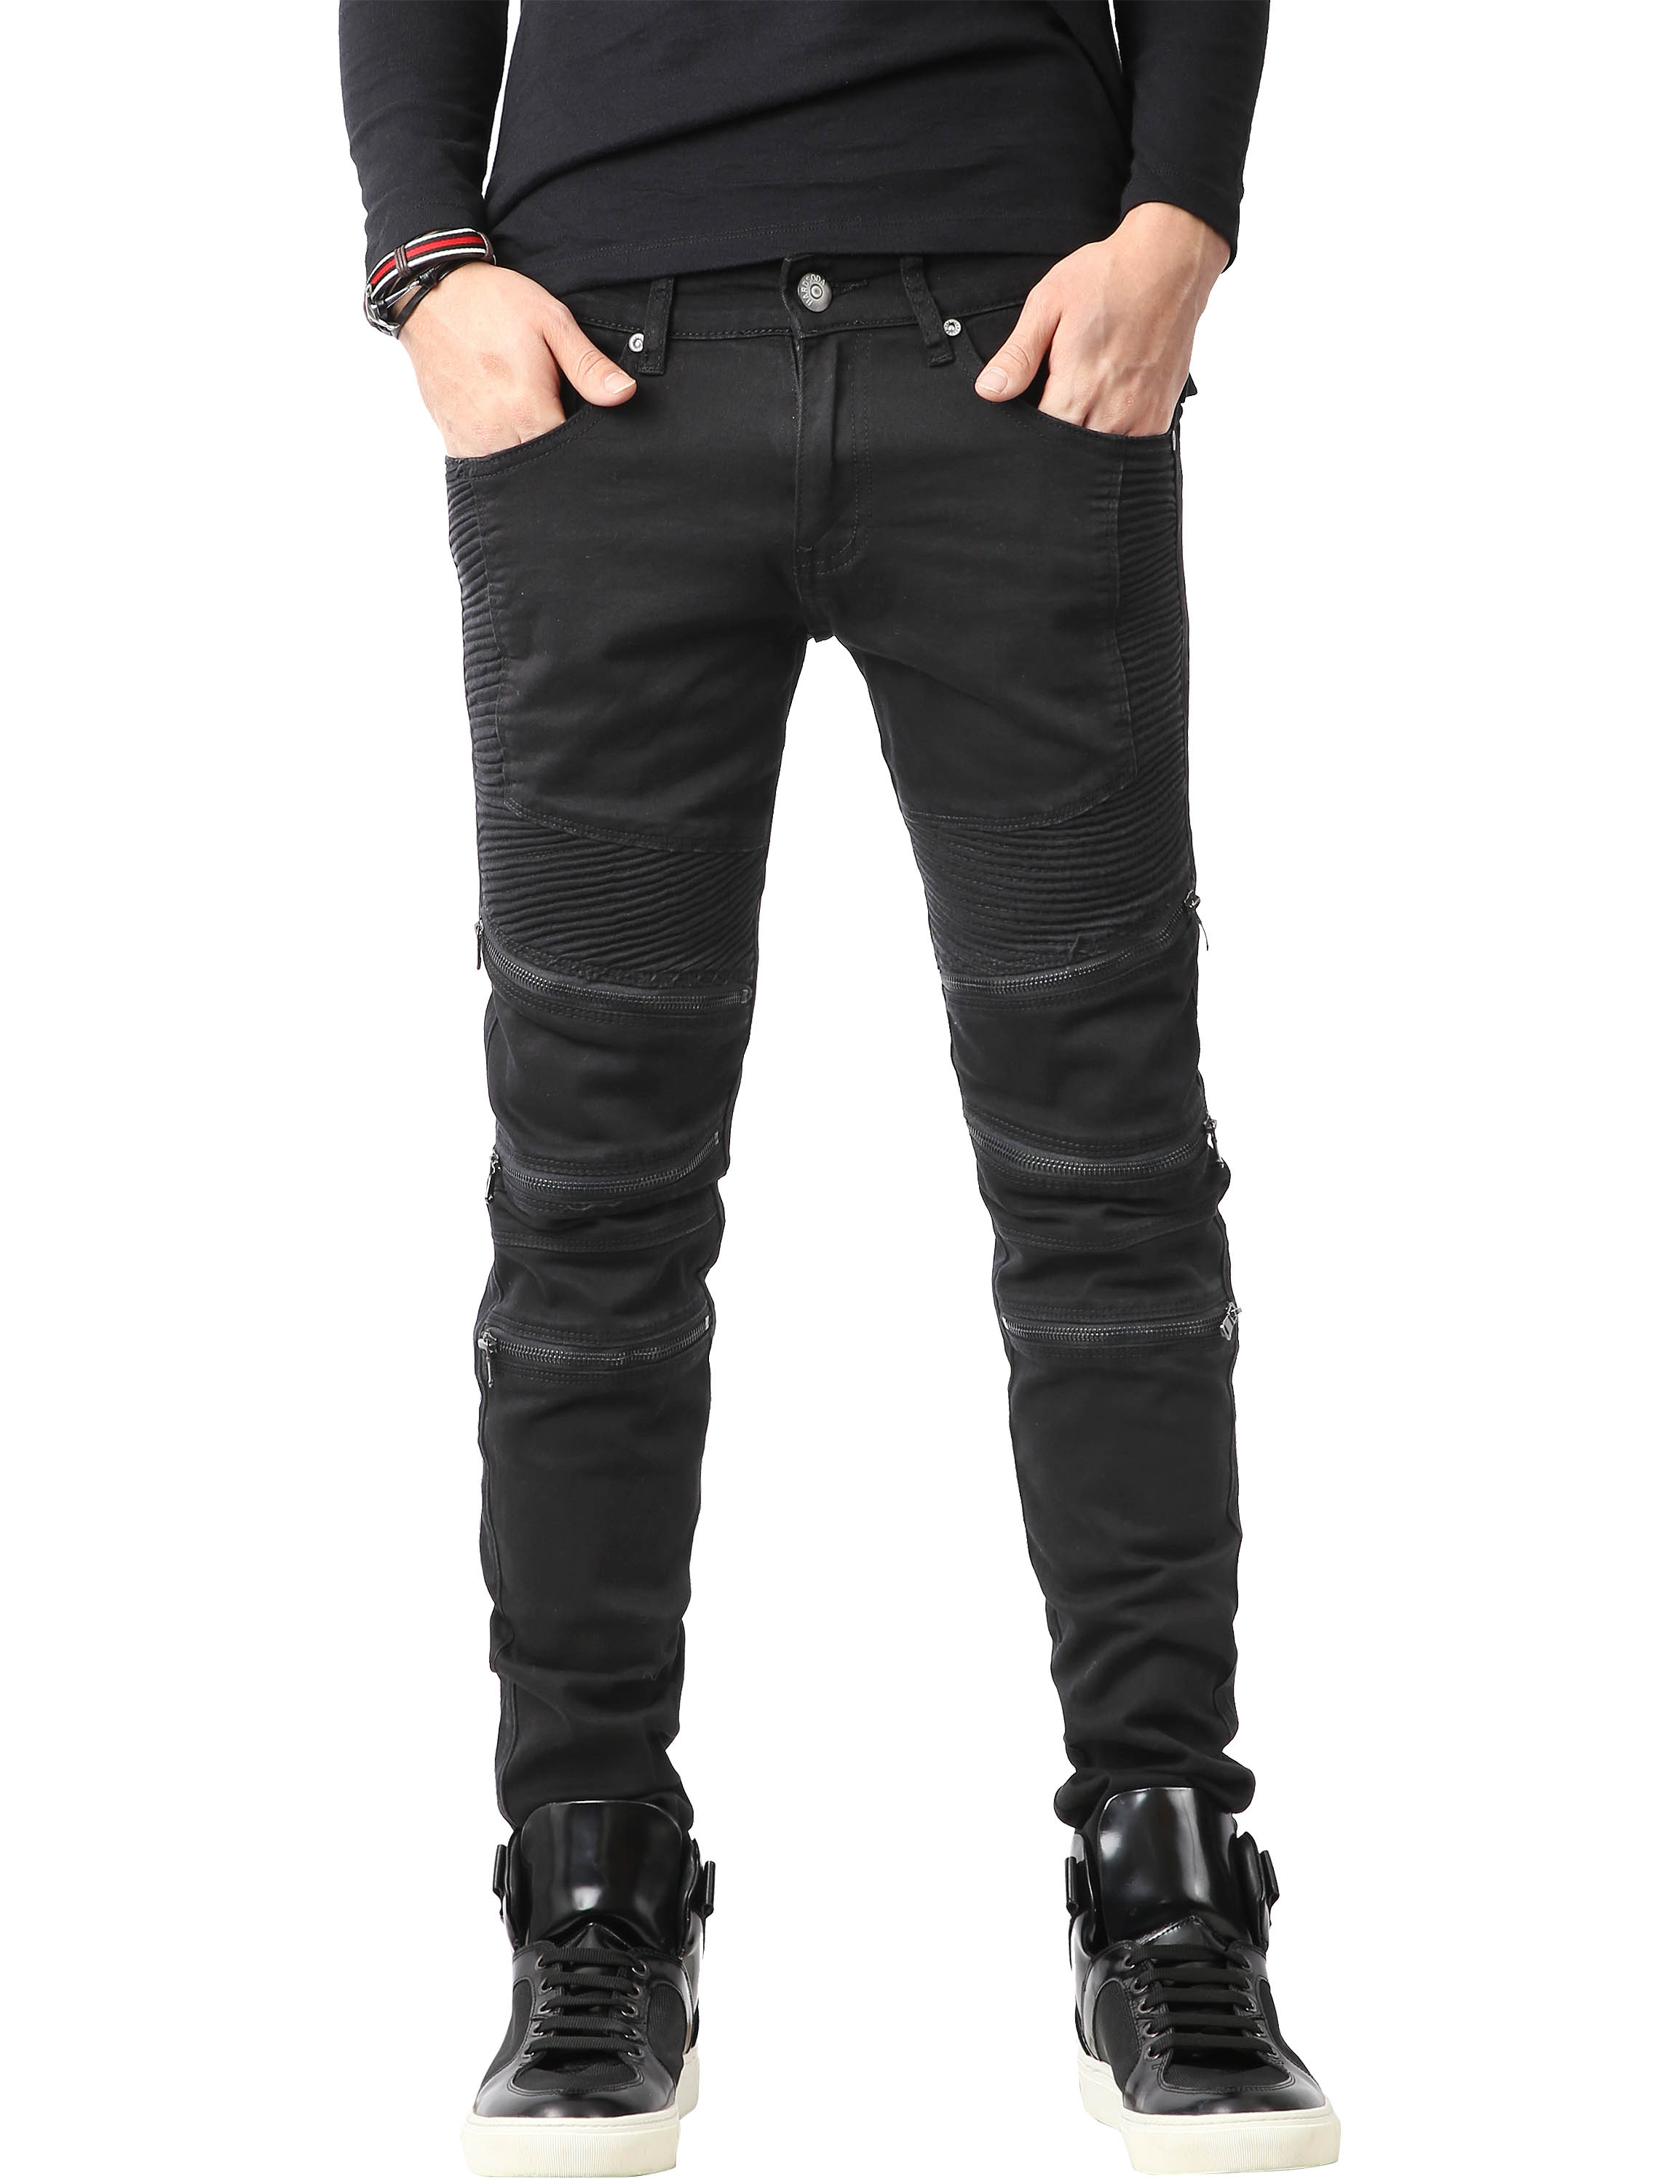 Ma Croix Mens Biker Jeans Slim Fit Distressed Ripped Zipper Stretch Denim Pants - image 2 of 6